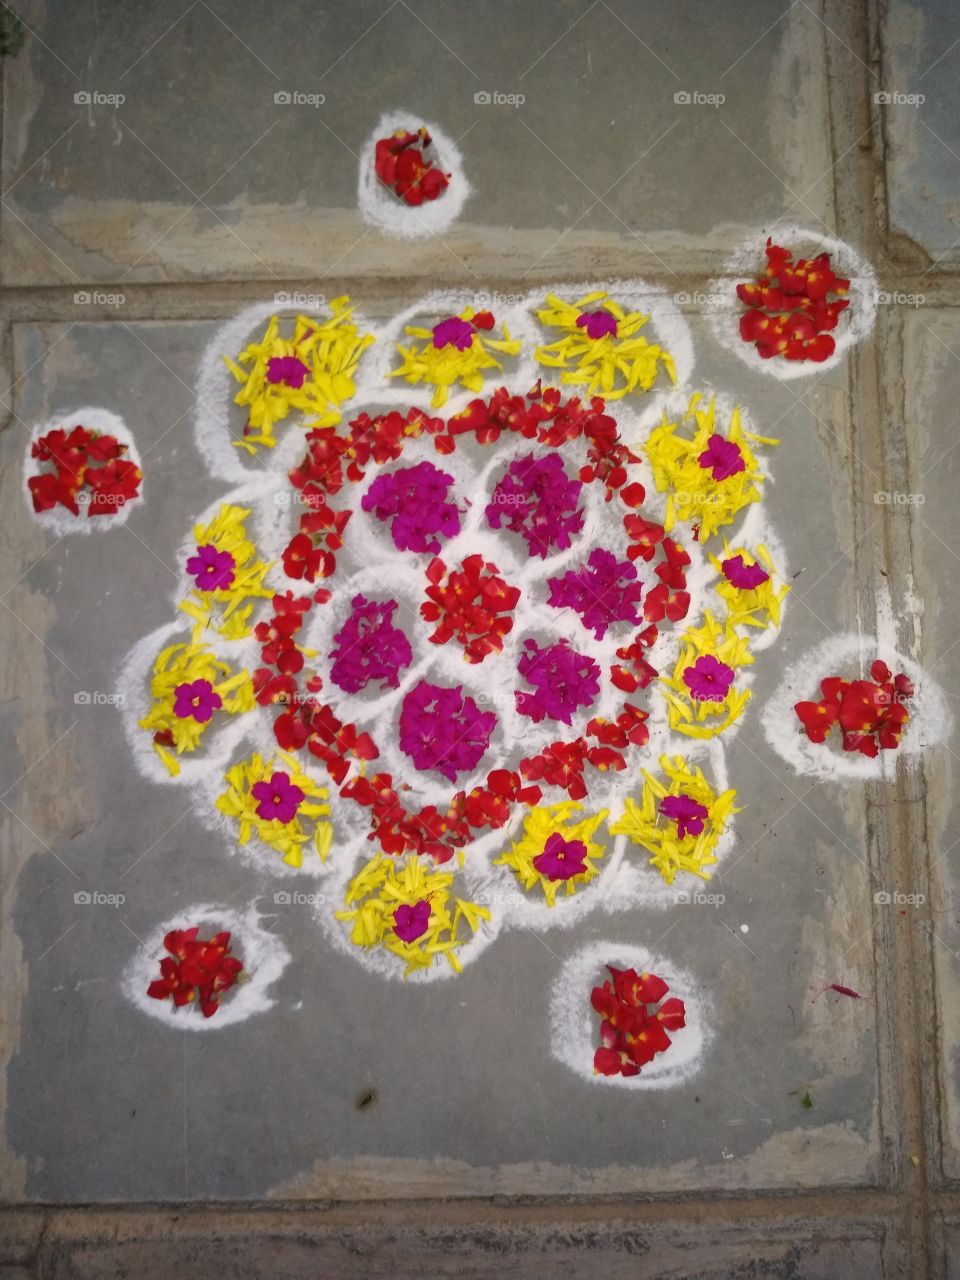 Rangoli design on the floor